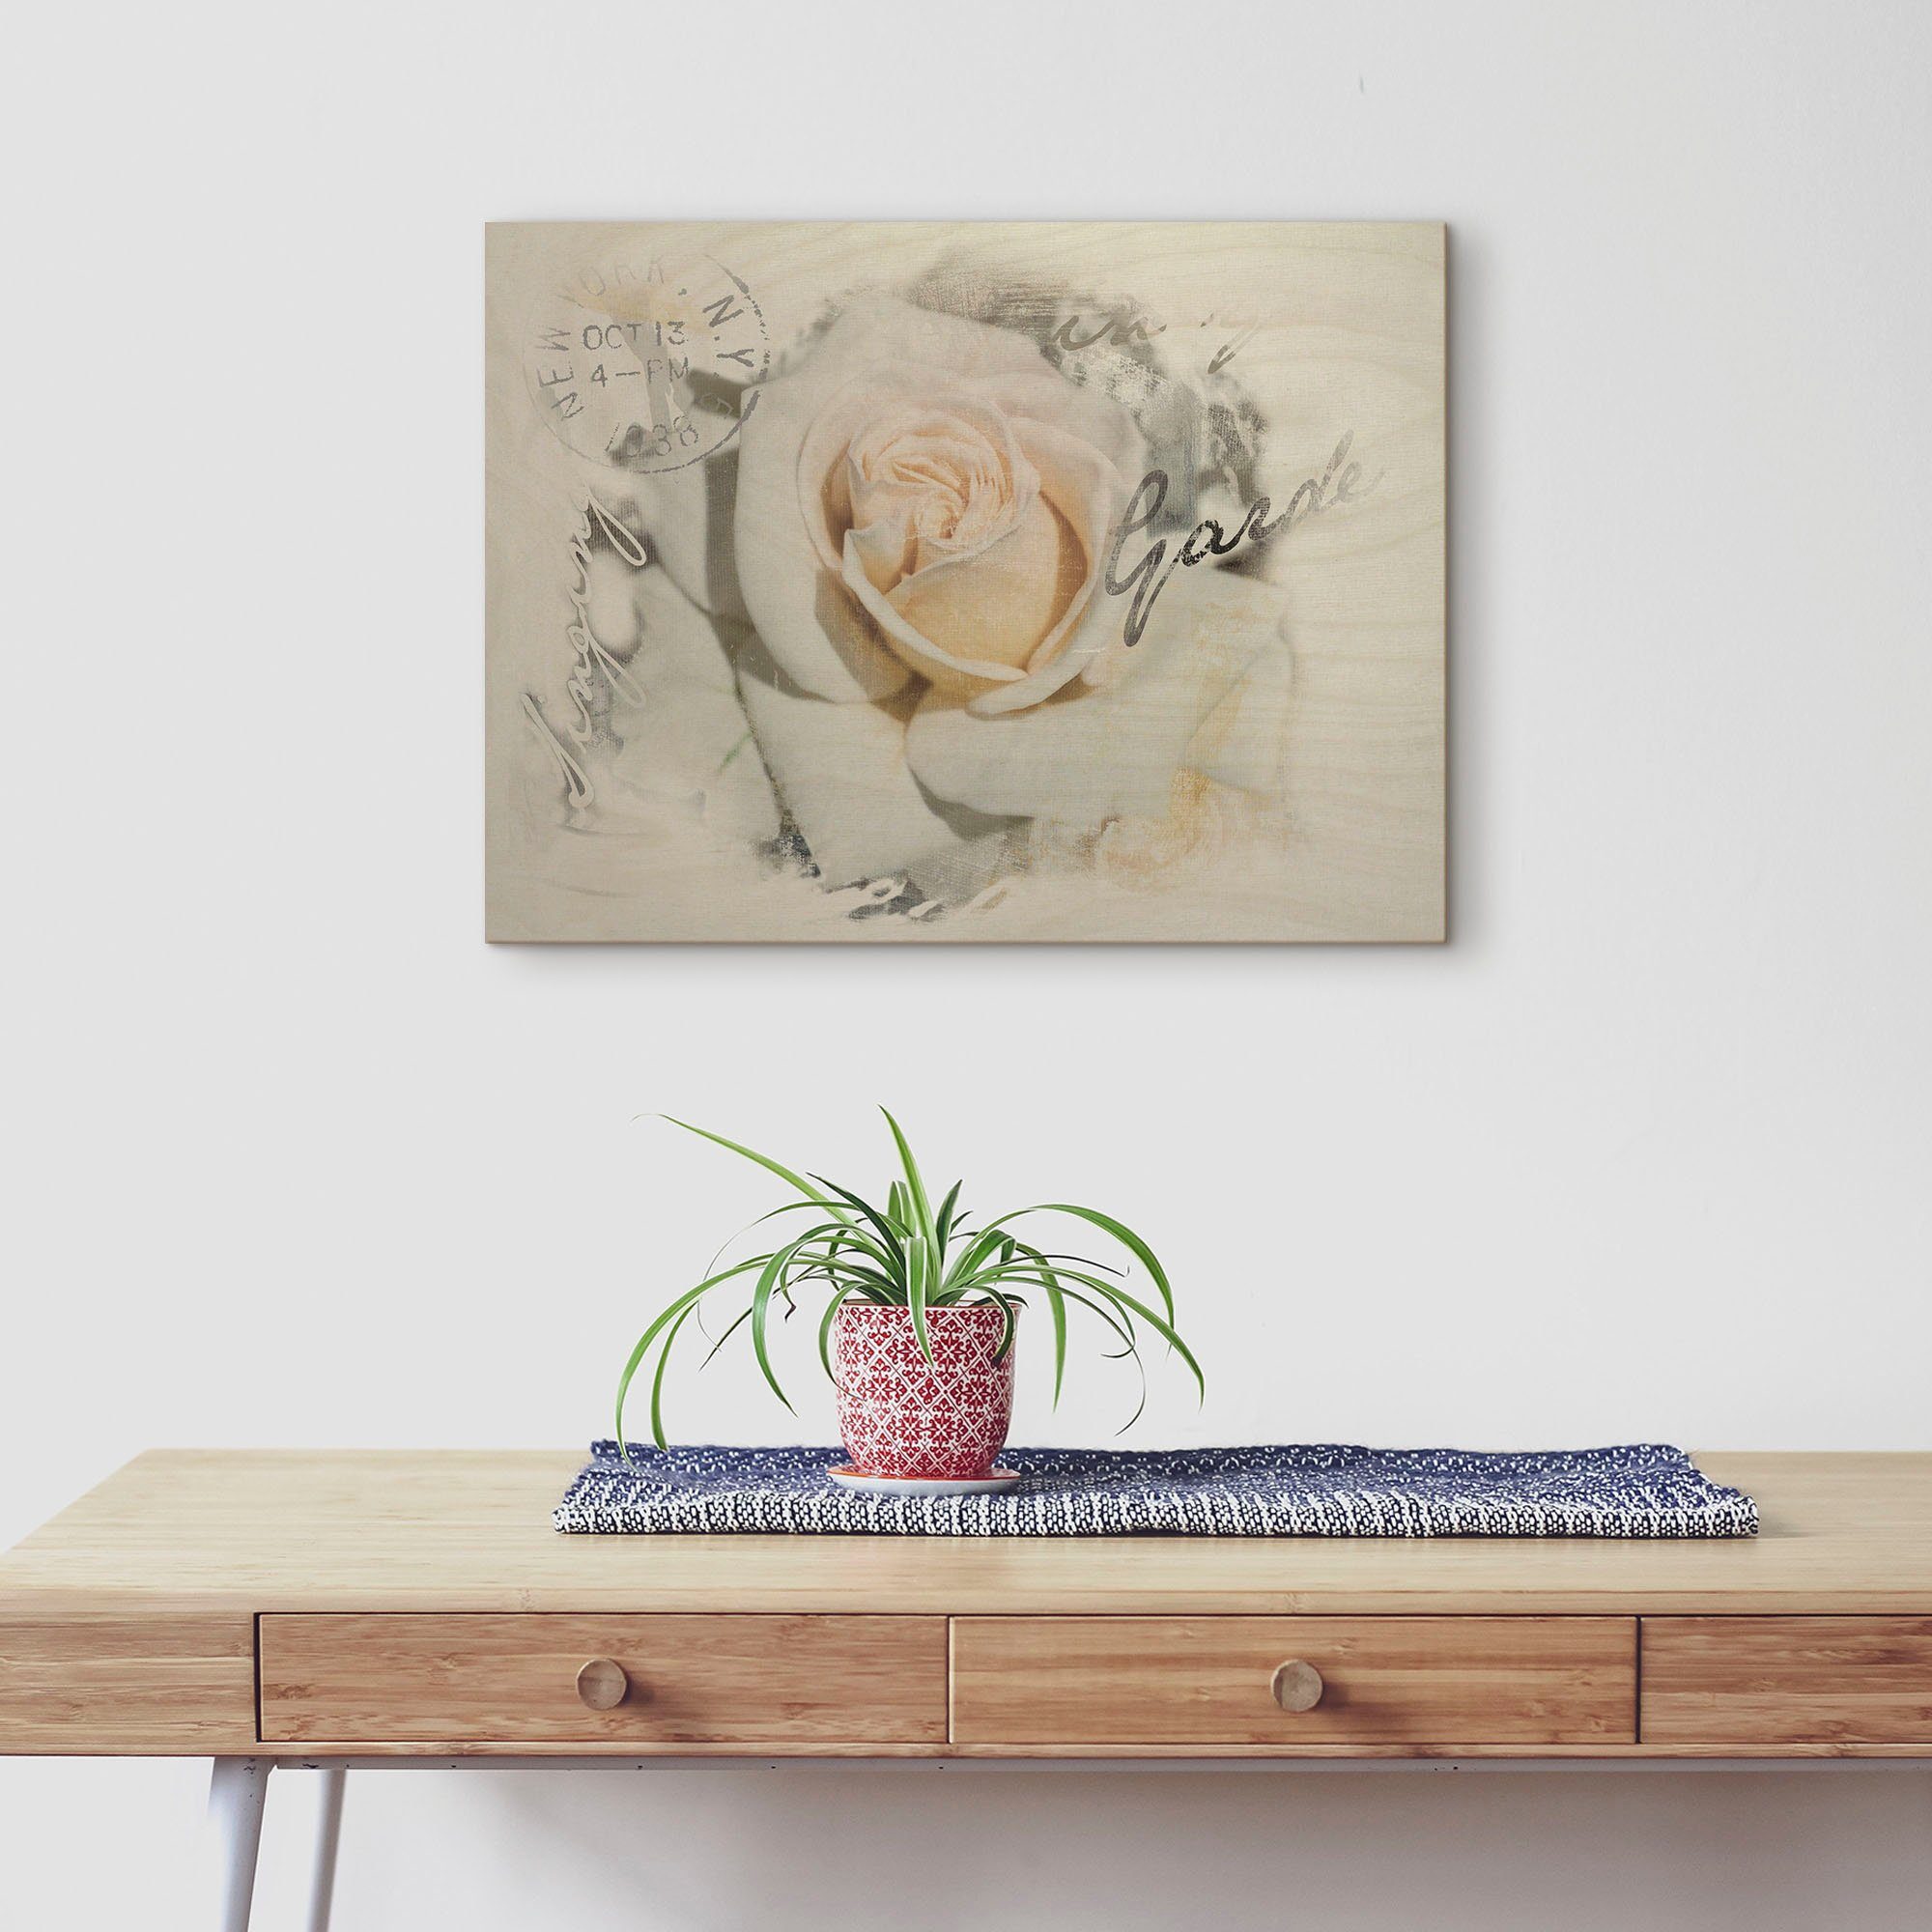 (1 Wandbild Birkenholz Blumenbilder mm Artland 12 Buchstaben Multiplexplatte Holzbild - aus aus Rose, St), In